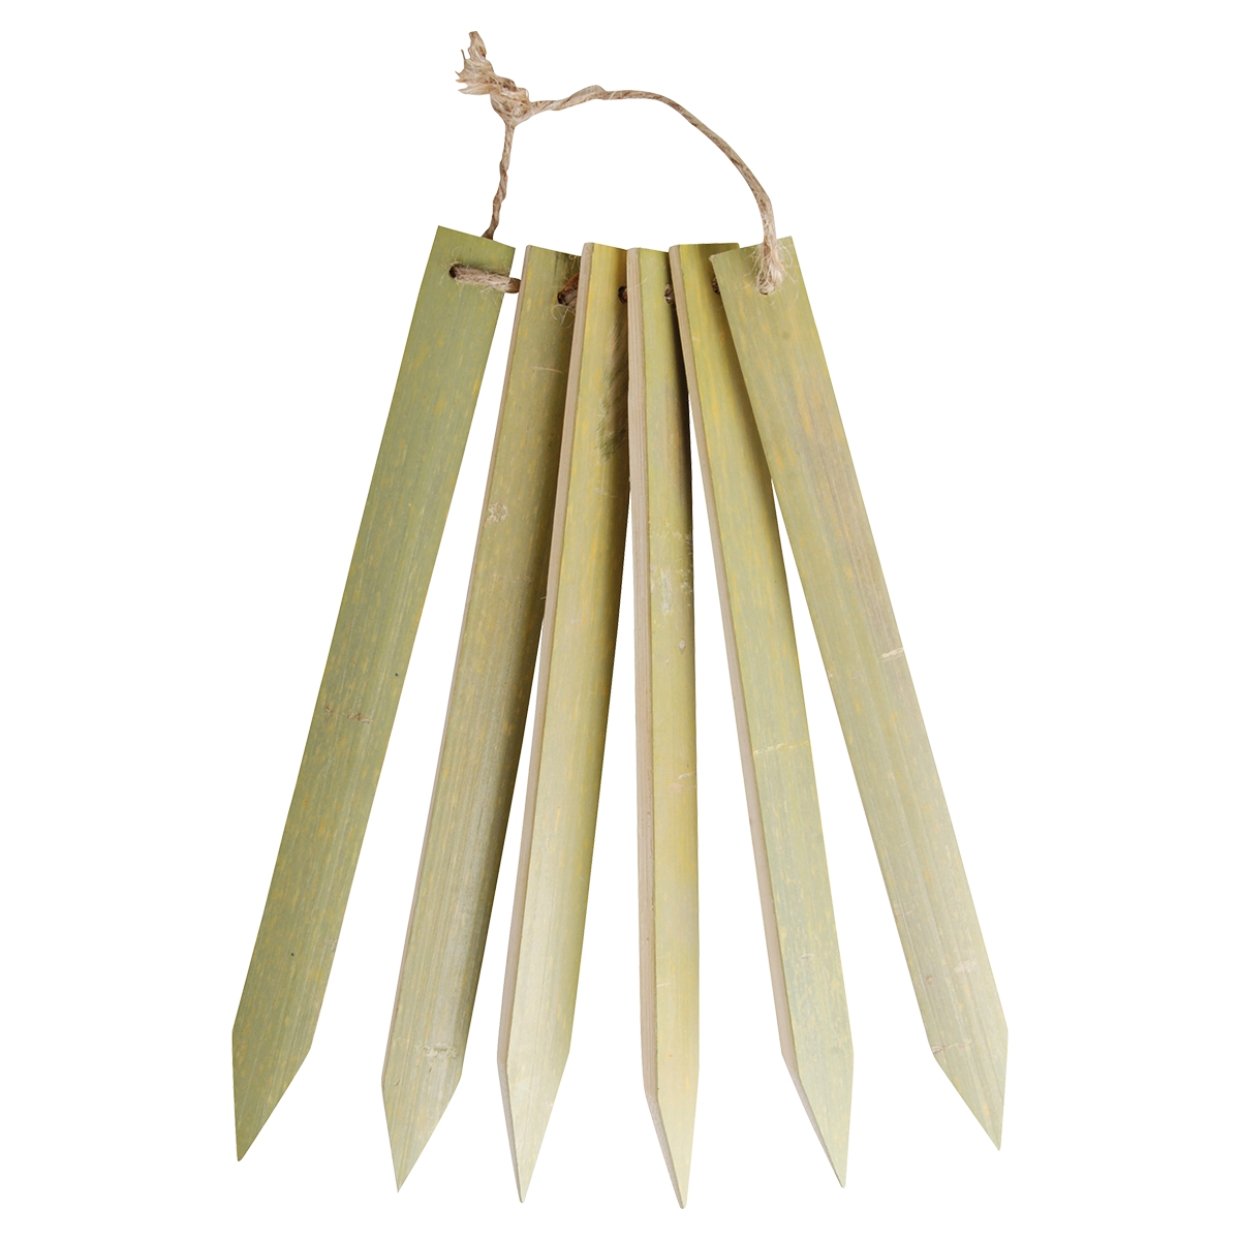 Plantenlabels in bamboe set van 6 - Tuinkabouter Chrisje